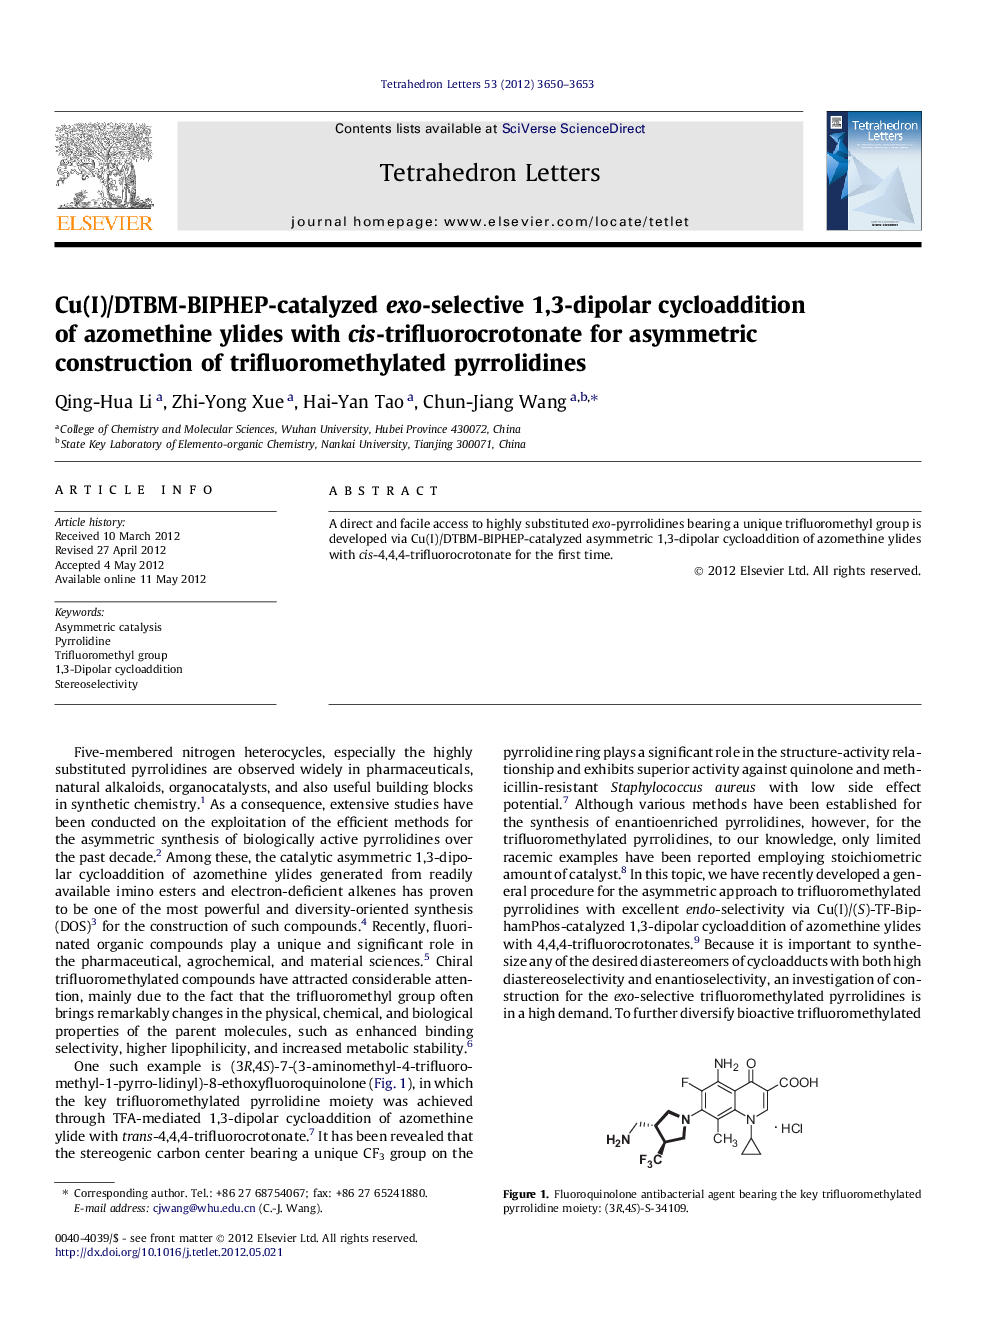 Cu(I)/DTBM-BIPHEP-catalyzed exo-selective 1,3-dipolar cycloaddition of azomethine ylides with cis-trifluorocrotonate for asymmetric construction of trifluoromethylated pyrrolidines